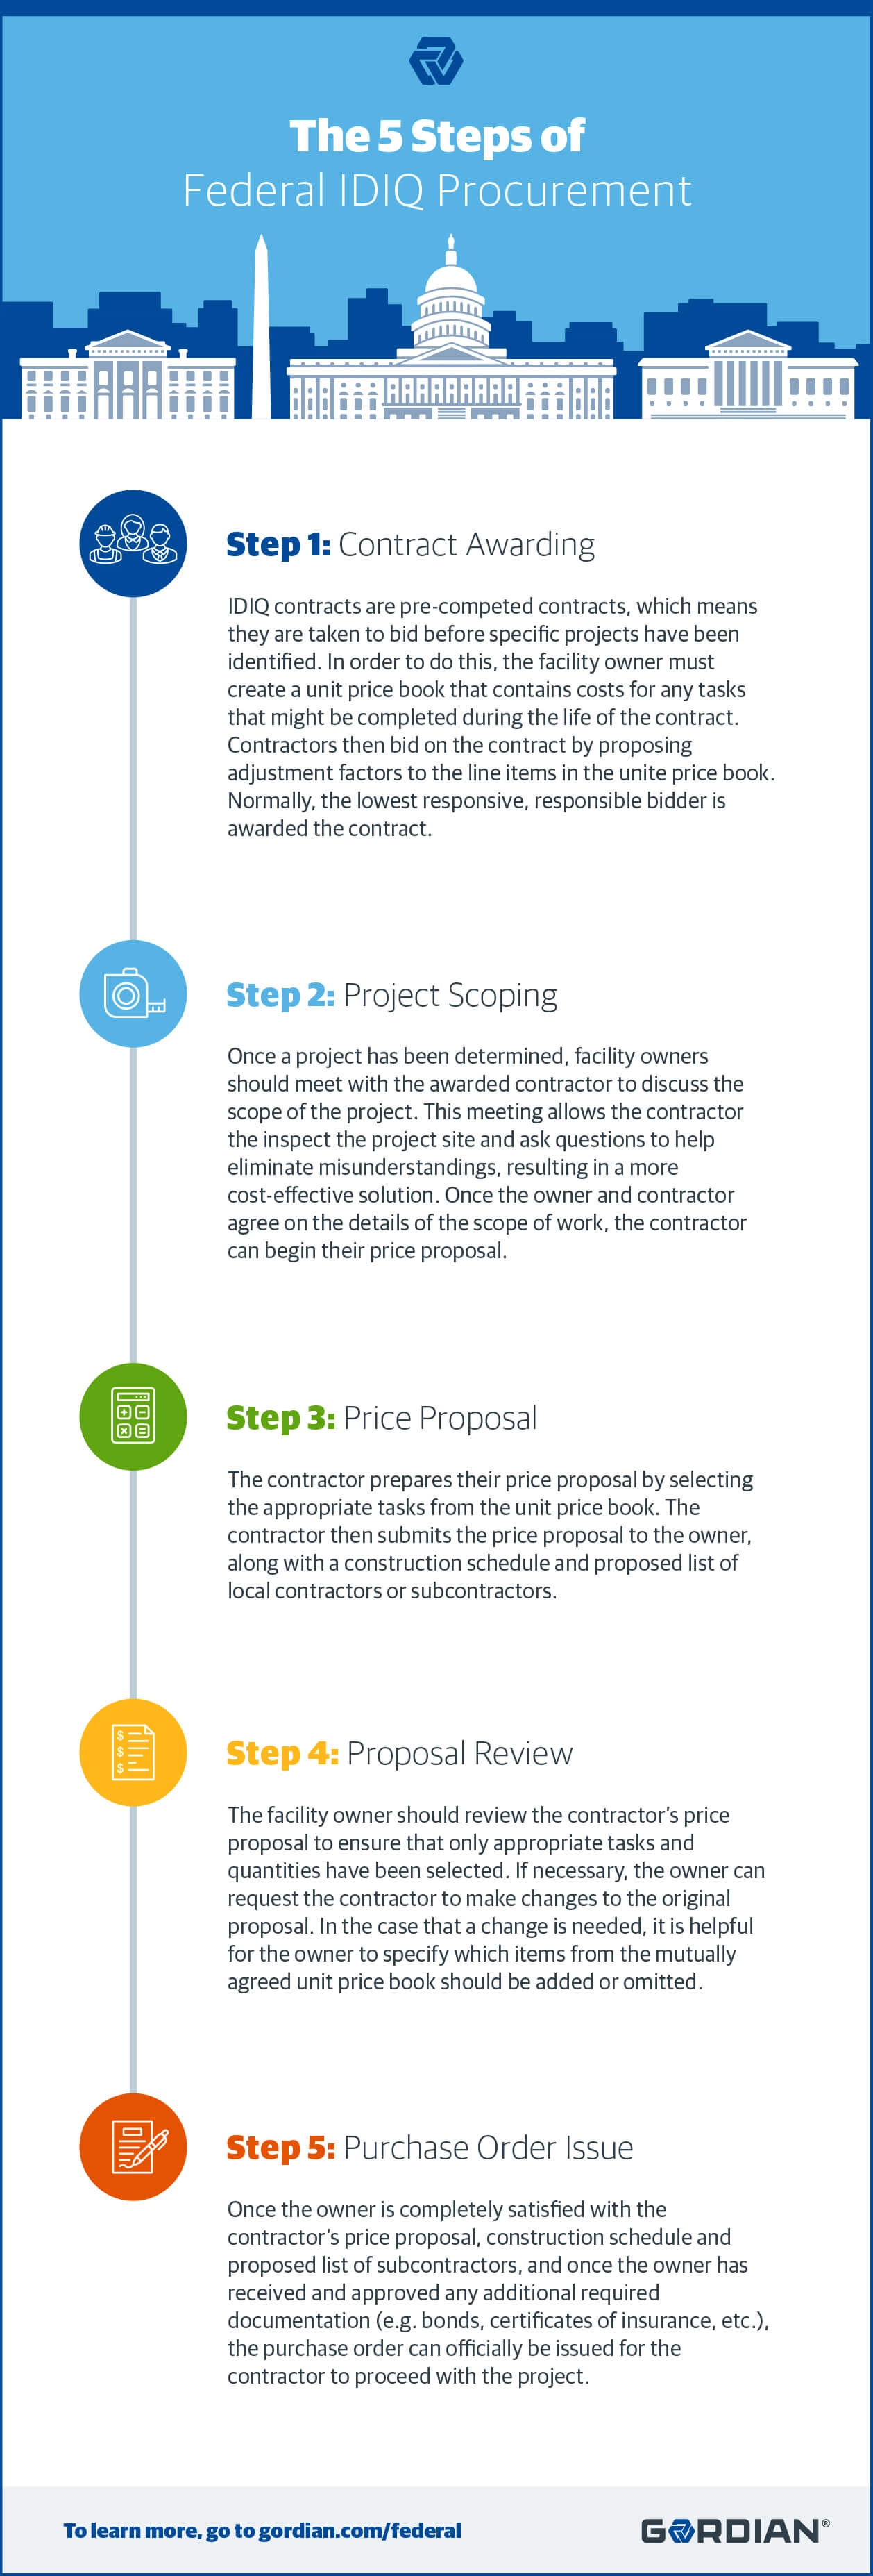 The 5 Steps of the Federal IDIQ Procurement Process